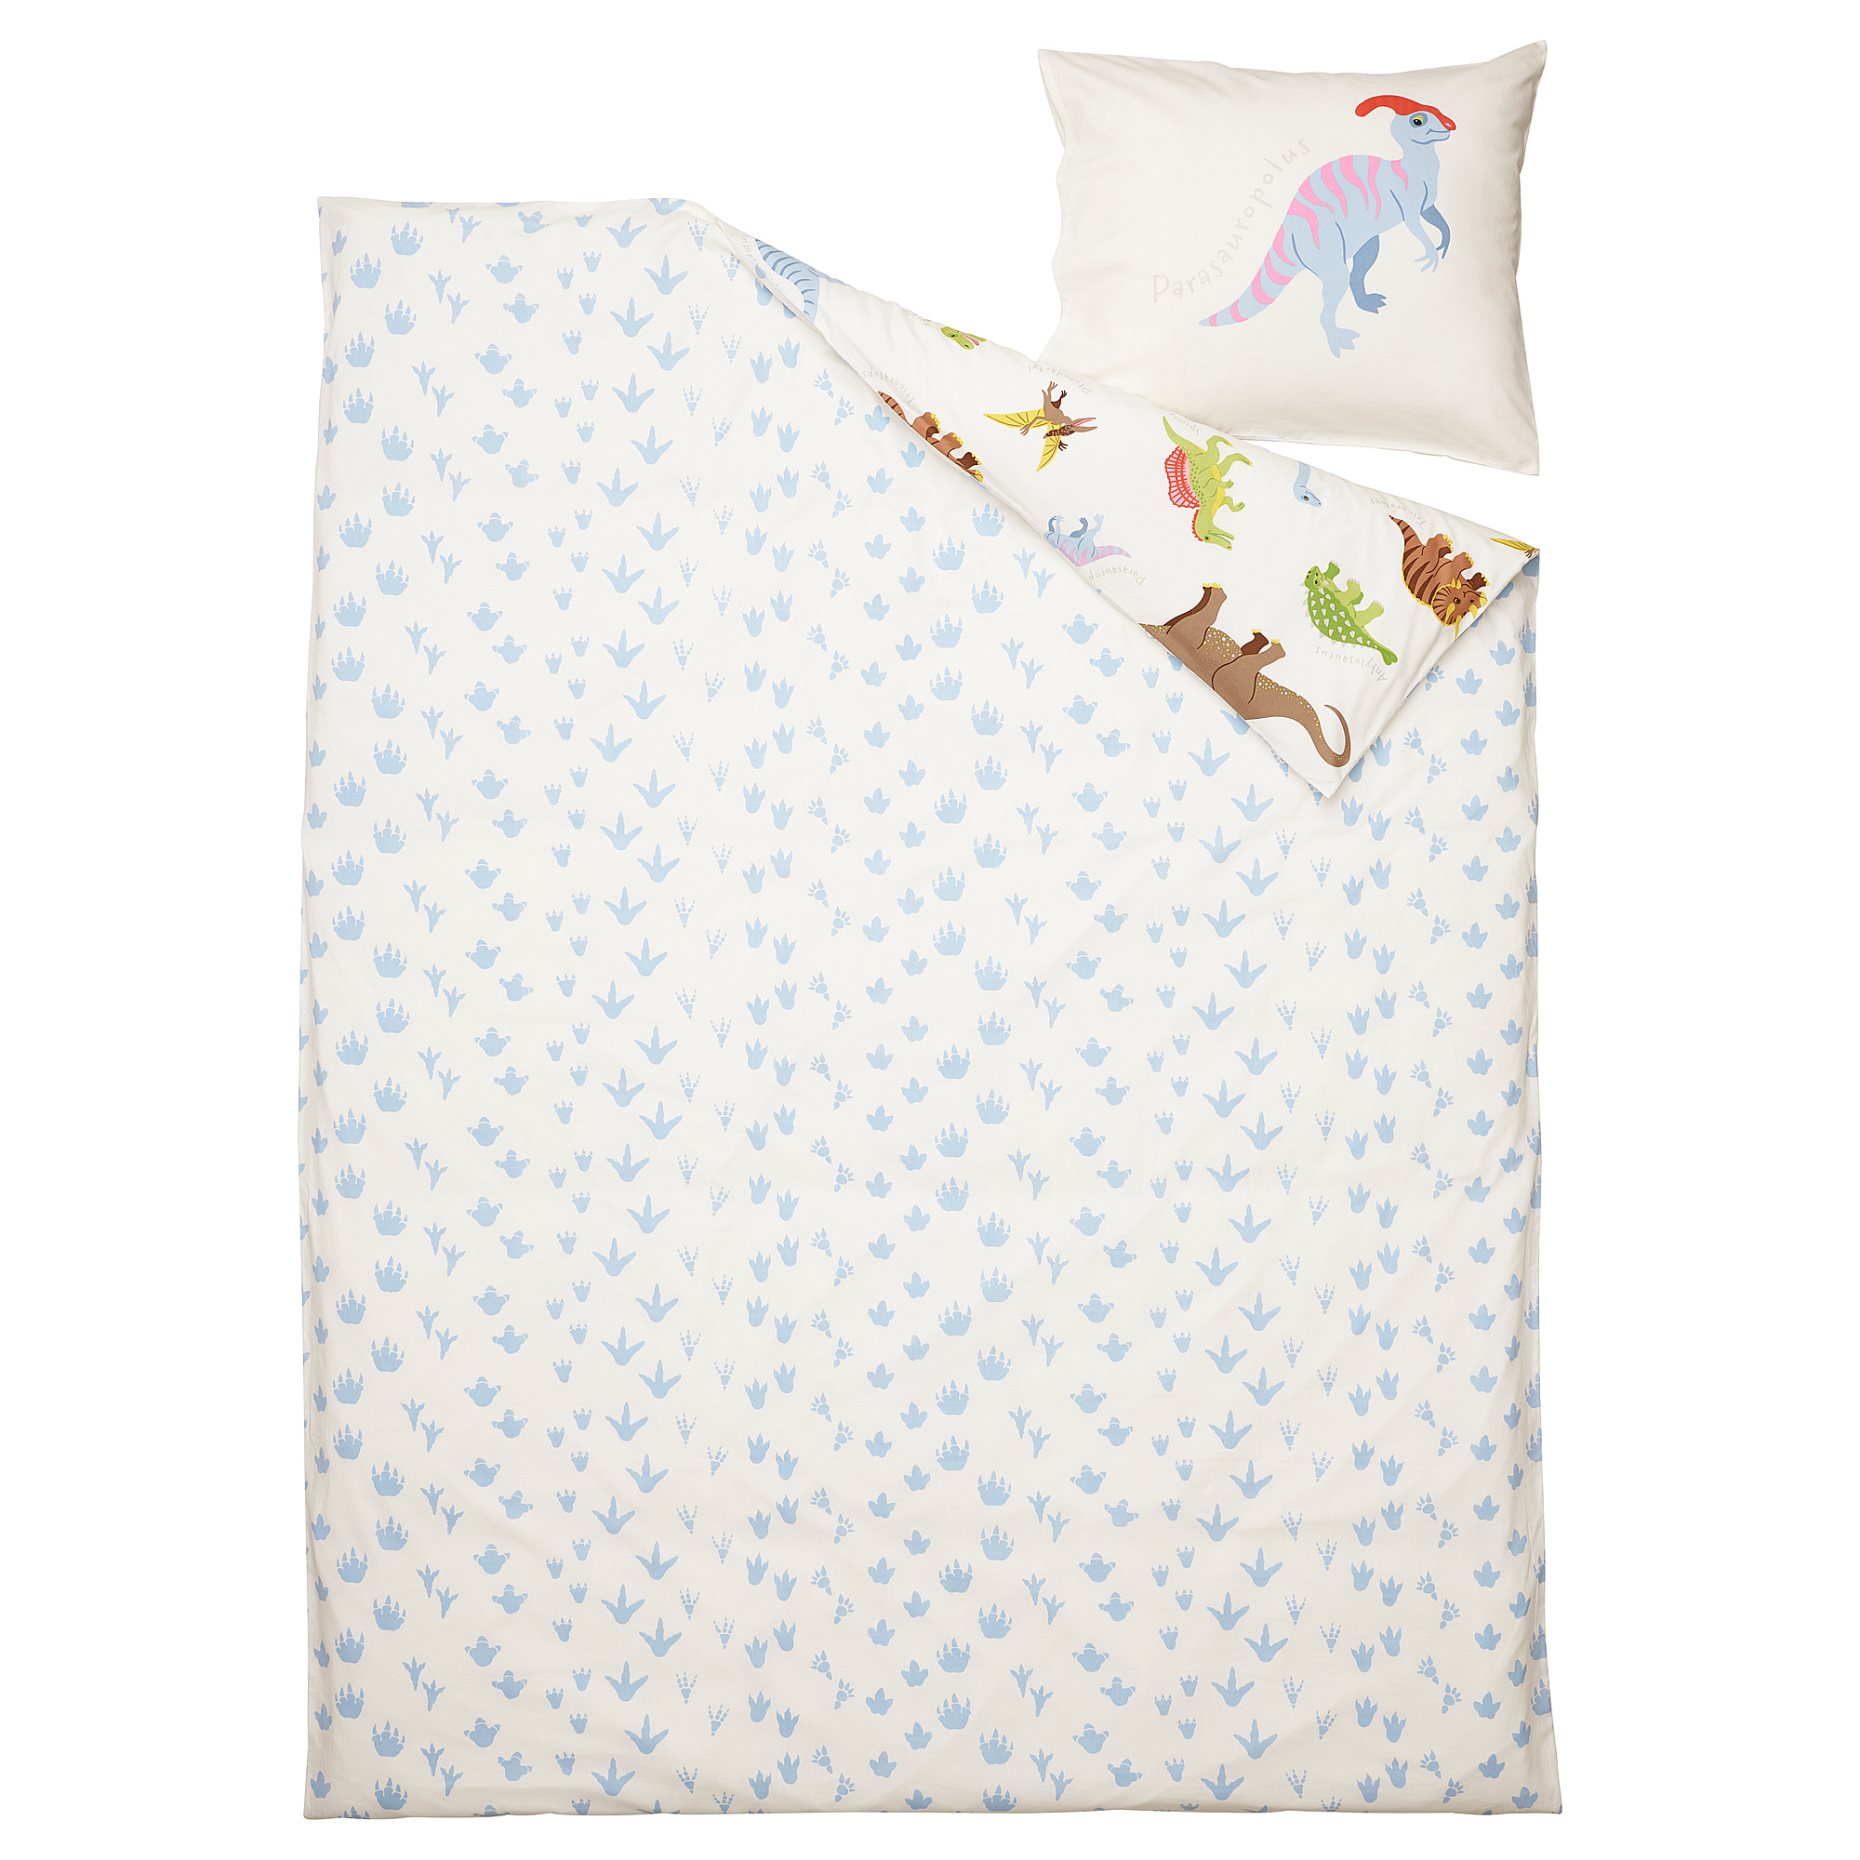 JÄTTELIK, quilt cover and pillowcase, 150x200/50x60 cm, 504.641.15